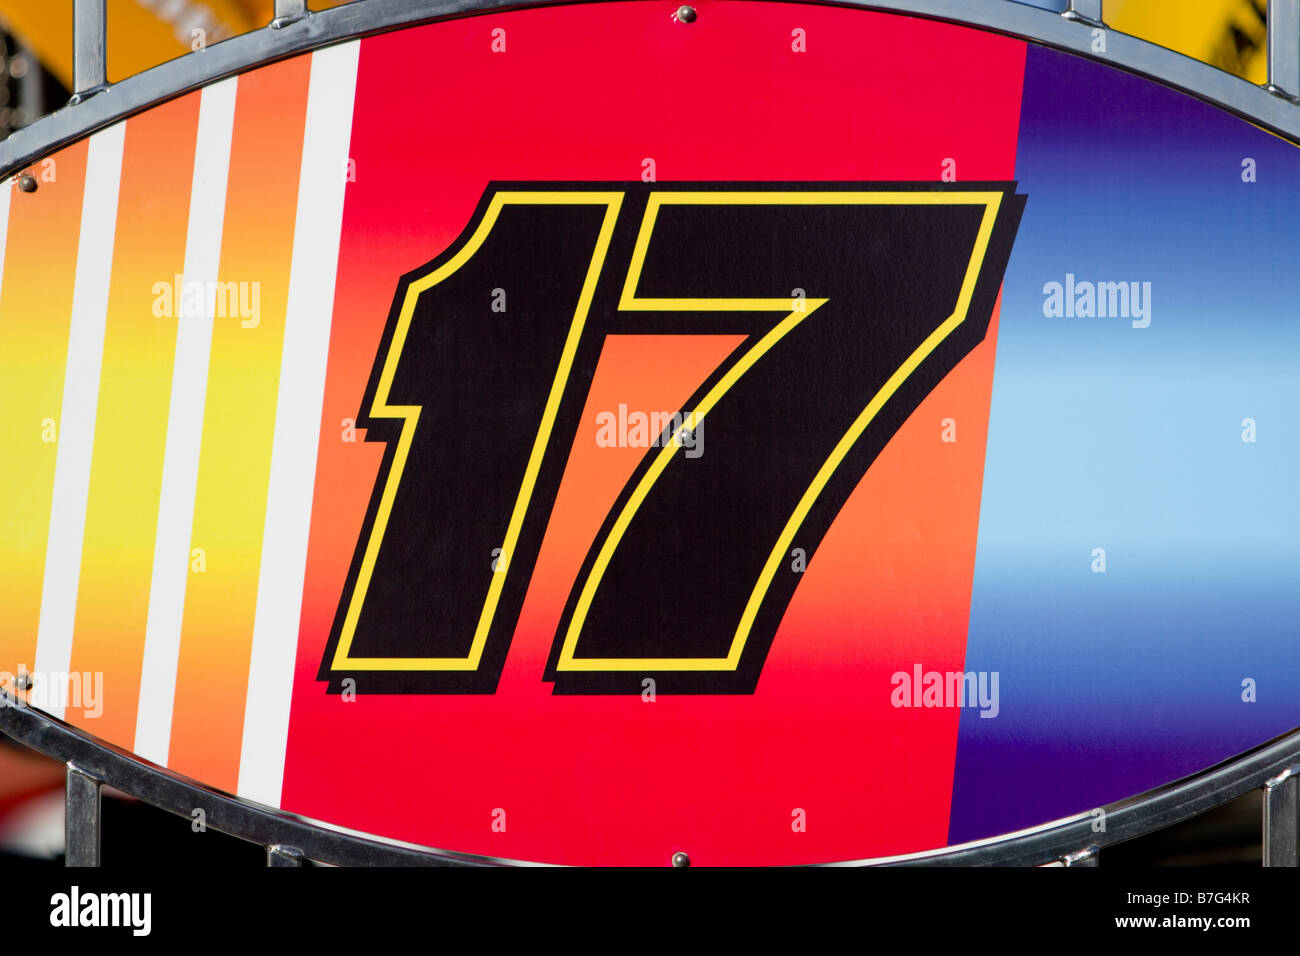 Number 17 in racing ellipse Stock Photo